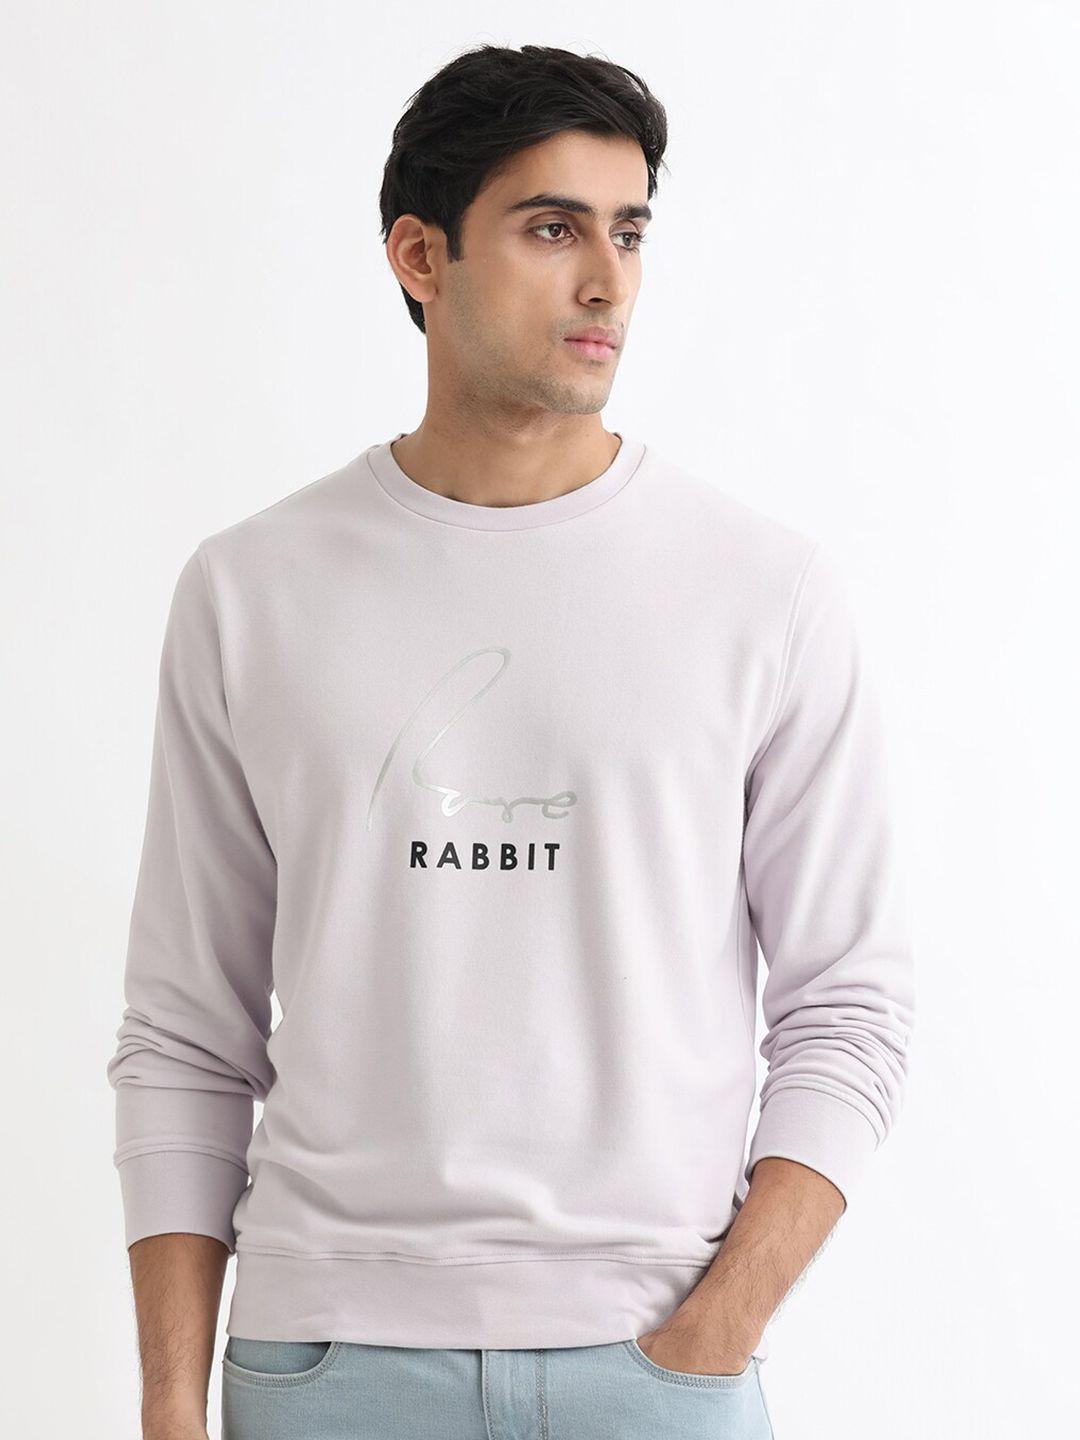 rare rabbit typography printed cotton pullover